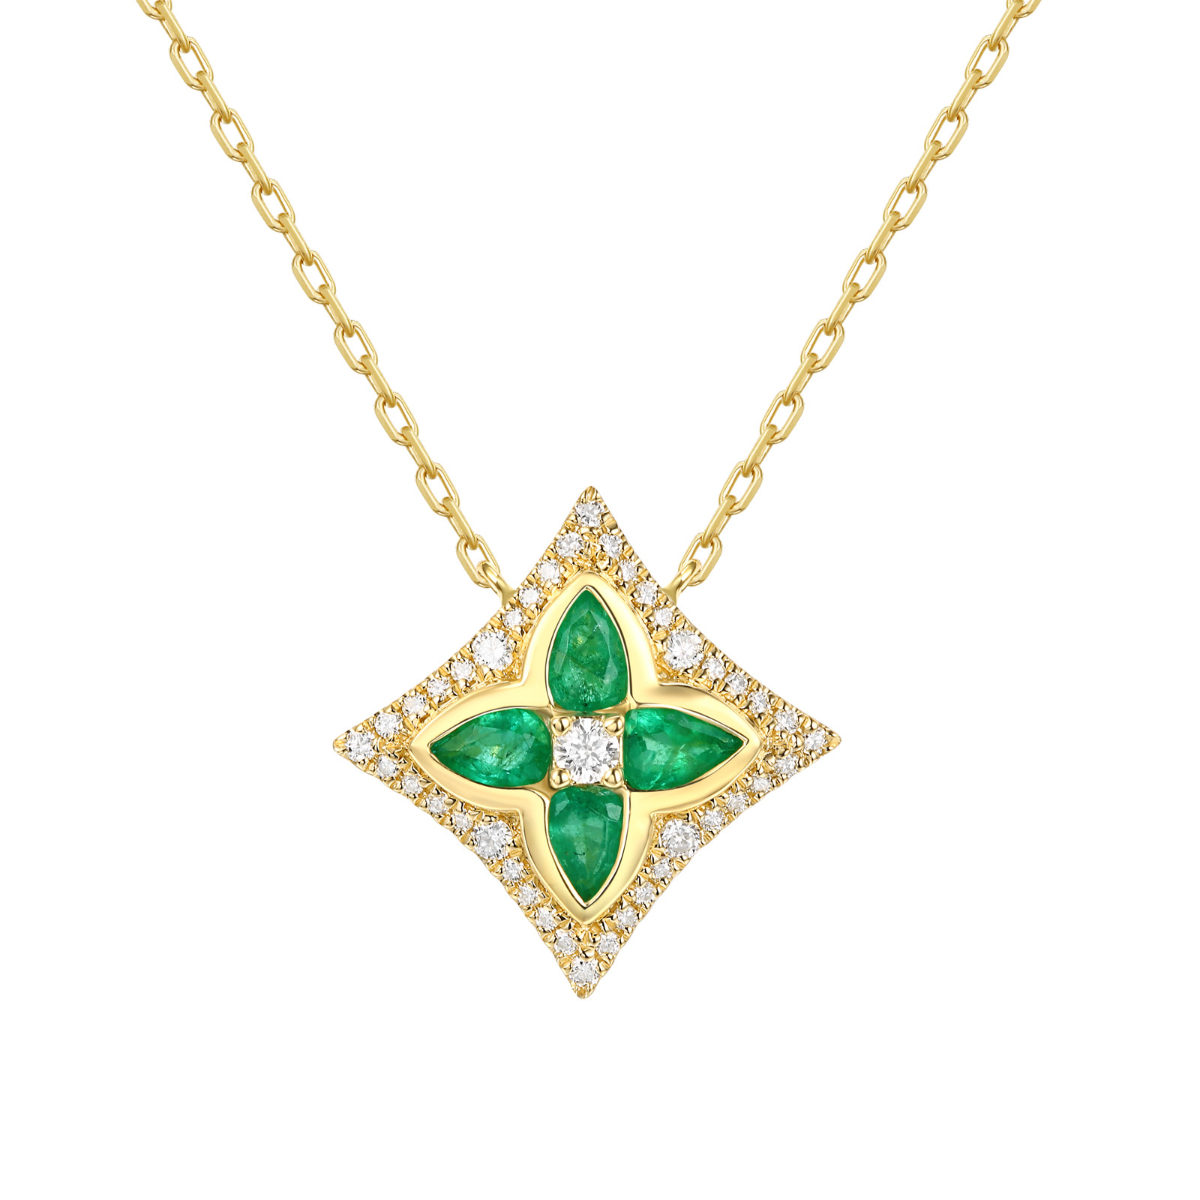 NL36381WEM – 18K Yellow Gold  Diamond and Gemstone Necklace, 0.67 TCW